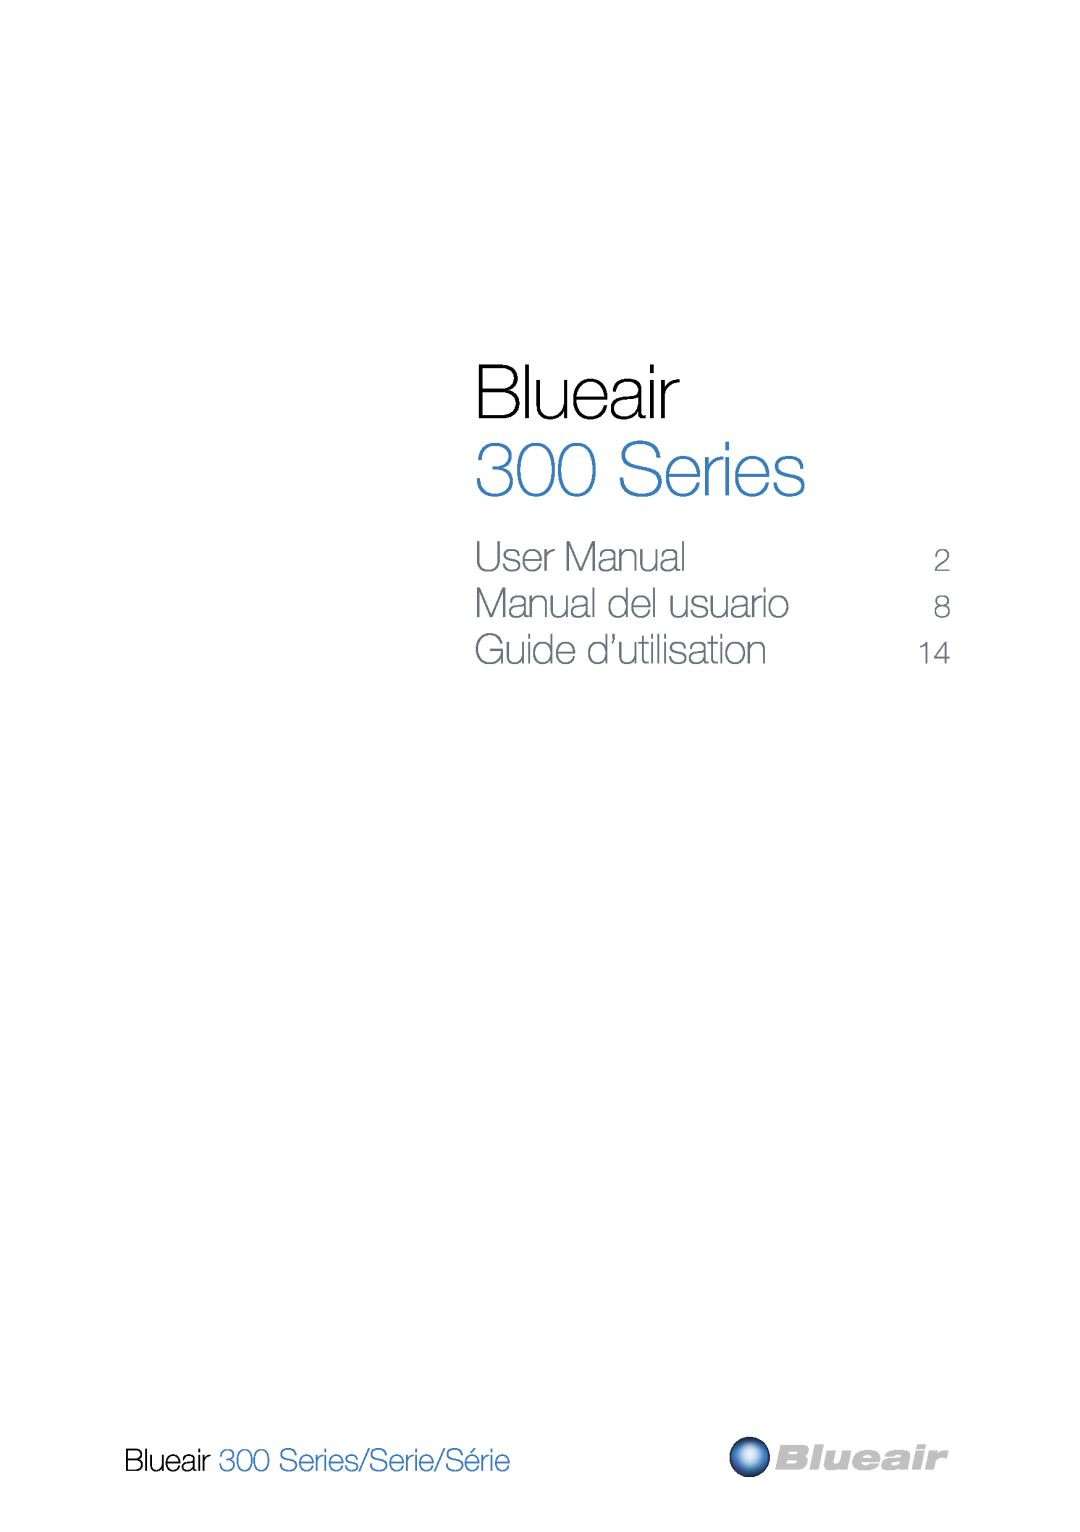 Blueair user manual 2 8, Blueair 300 Series/Serie/Série 